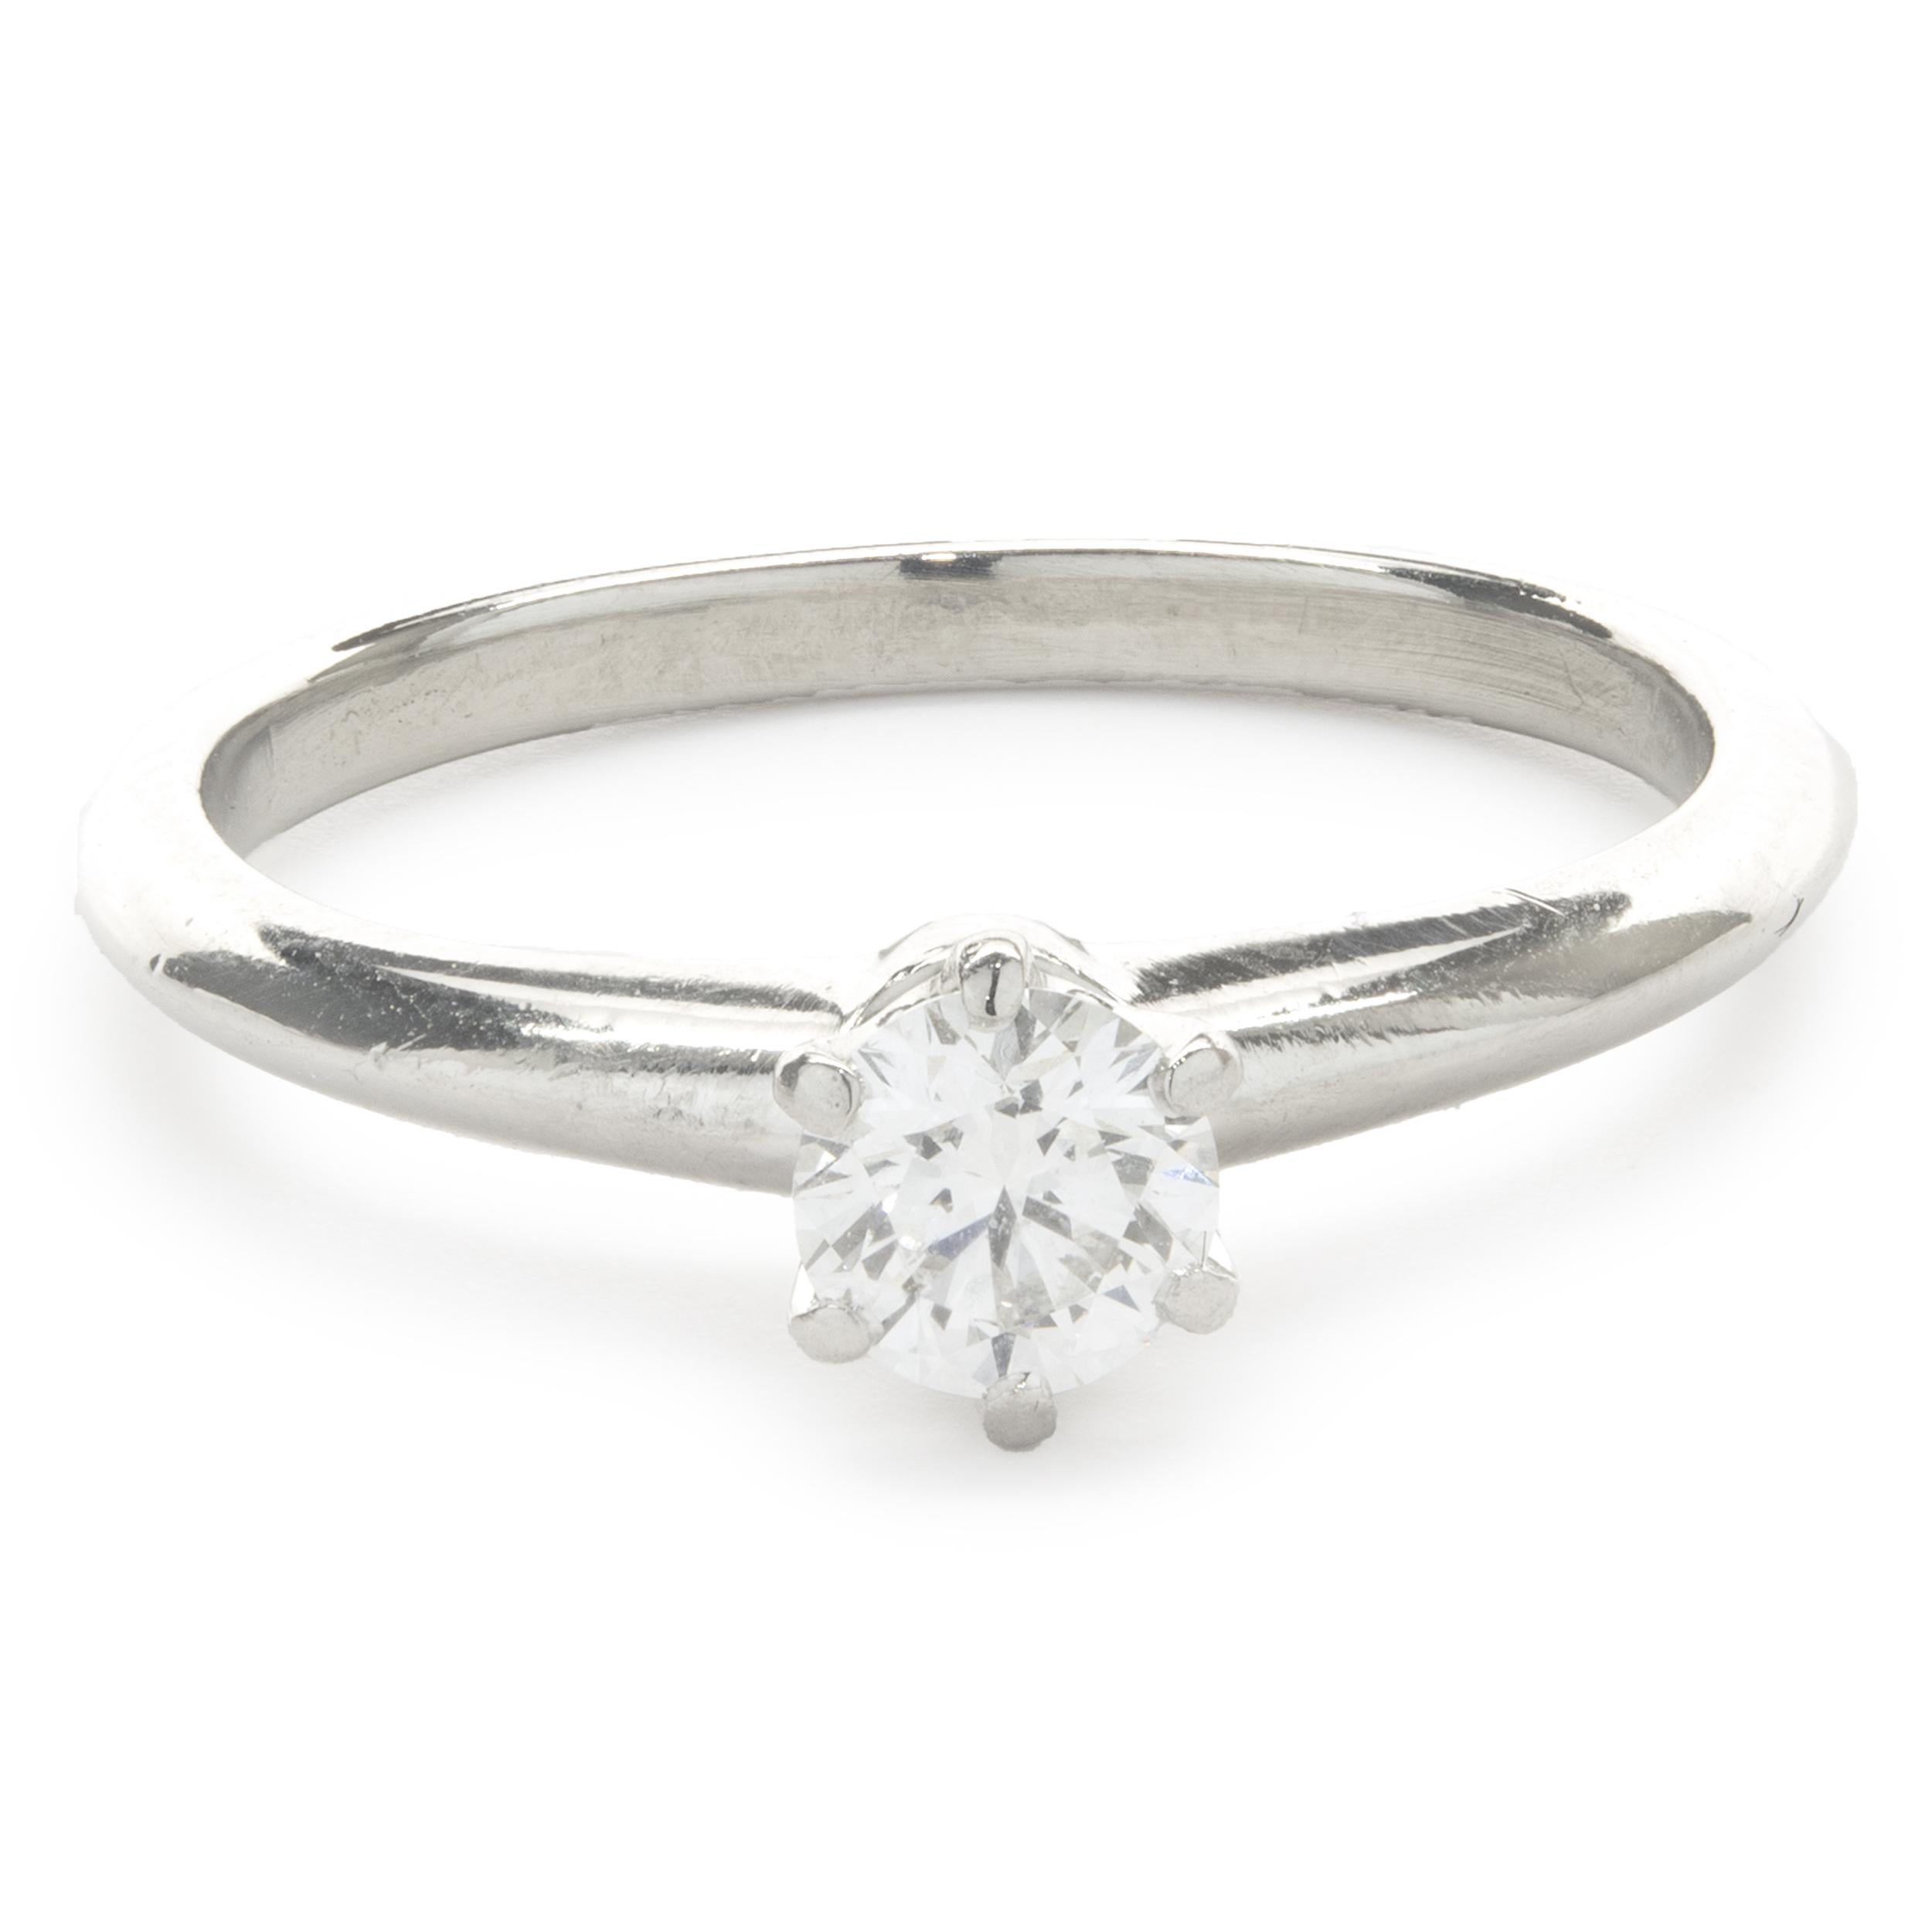 Tiffany & Co. Platinum Round Brilliant Cut Diamond Solitaire Ring